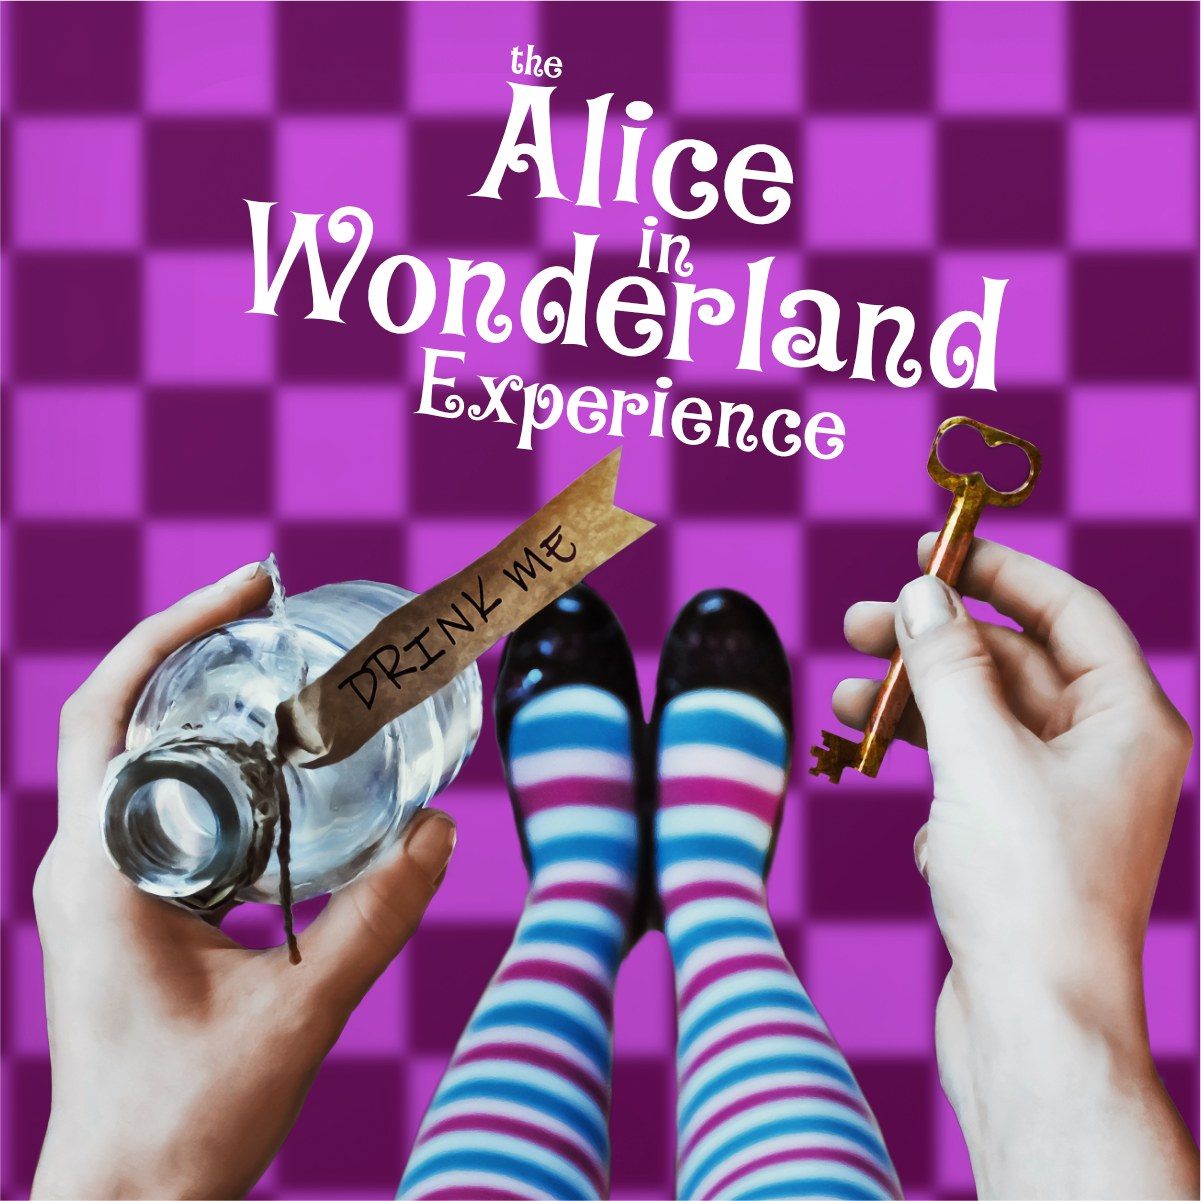 Alice in Wonderland - Visit Harrisonburg Virginia in the